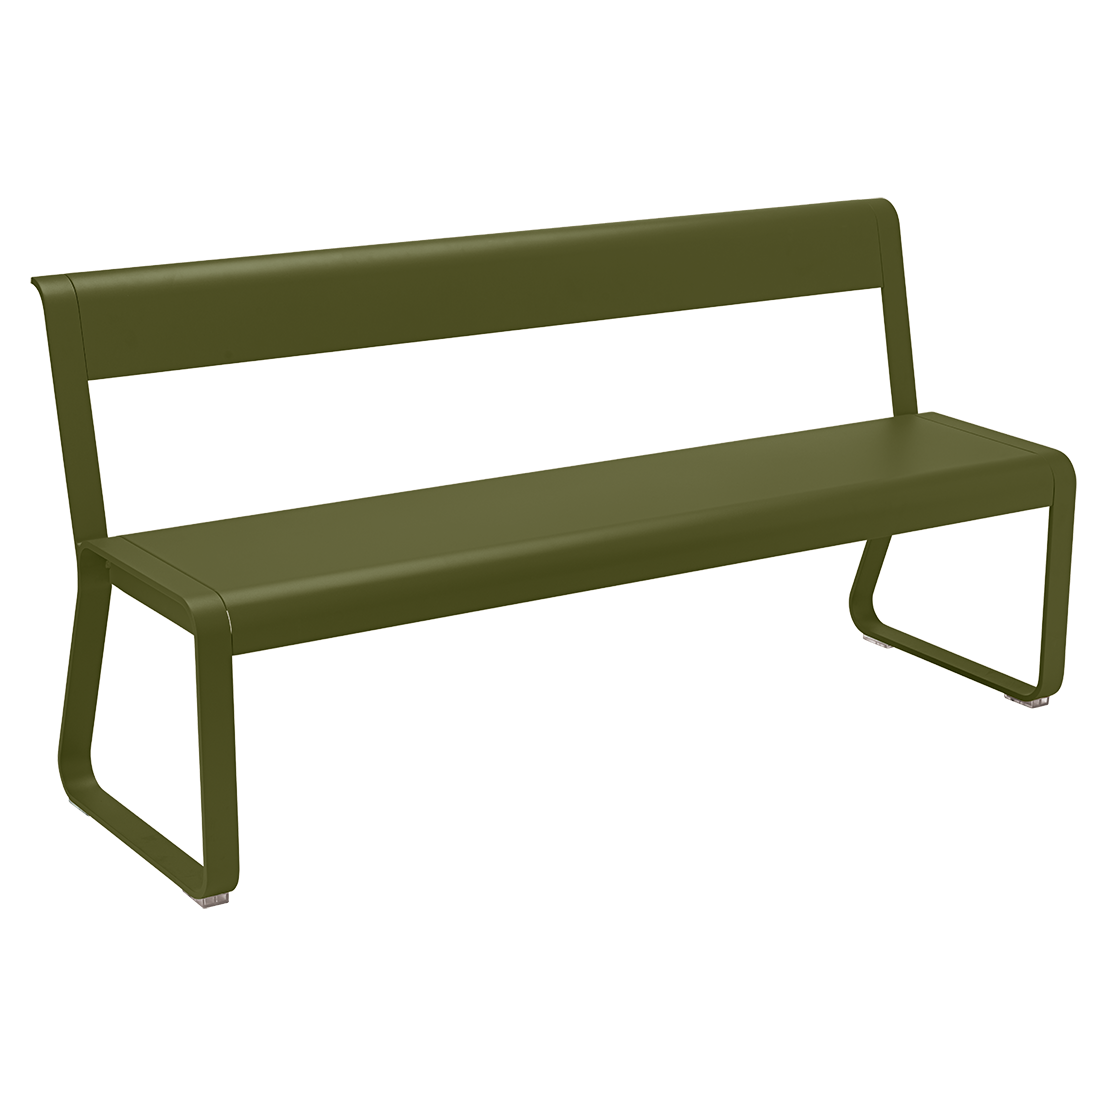 BELLEVIE bench with backrest